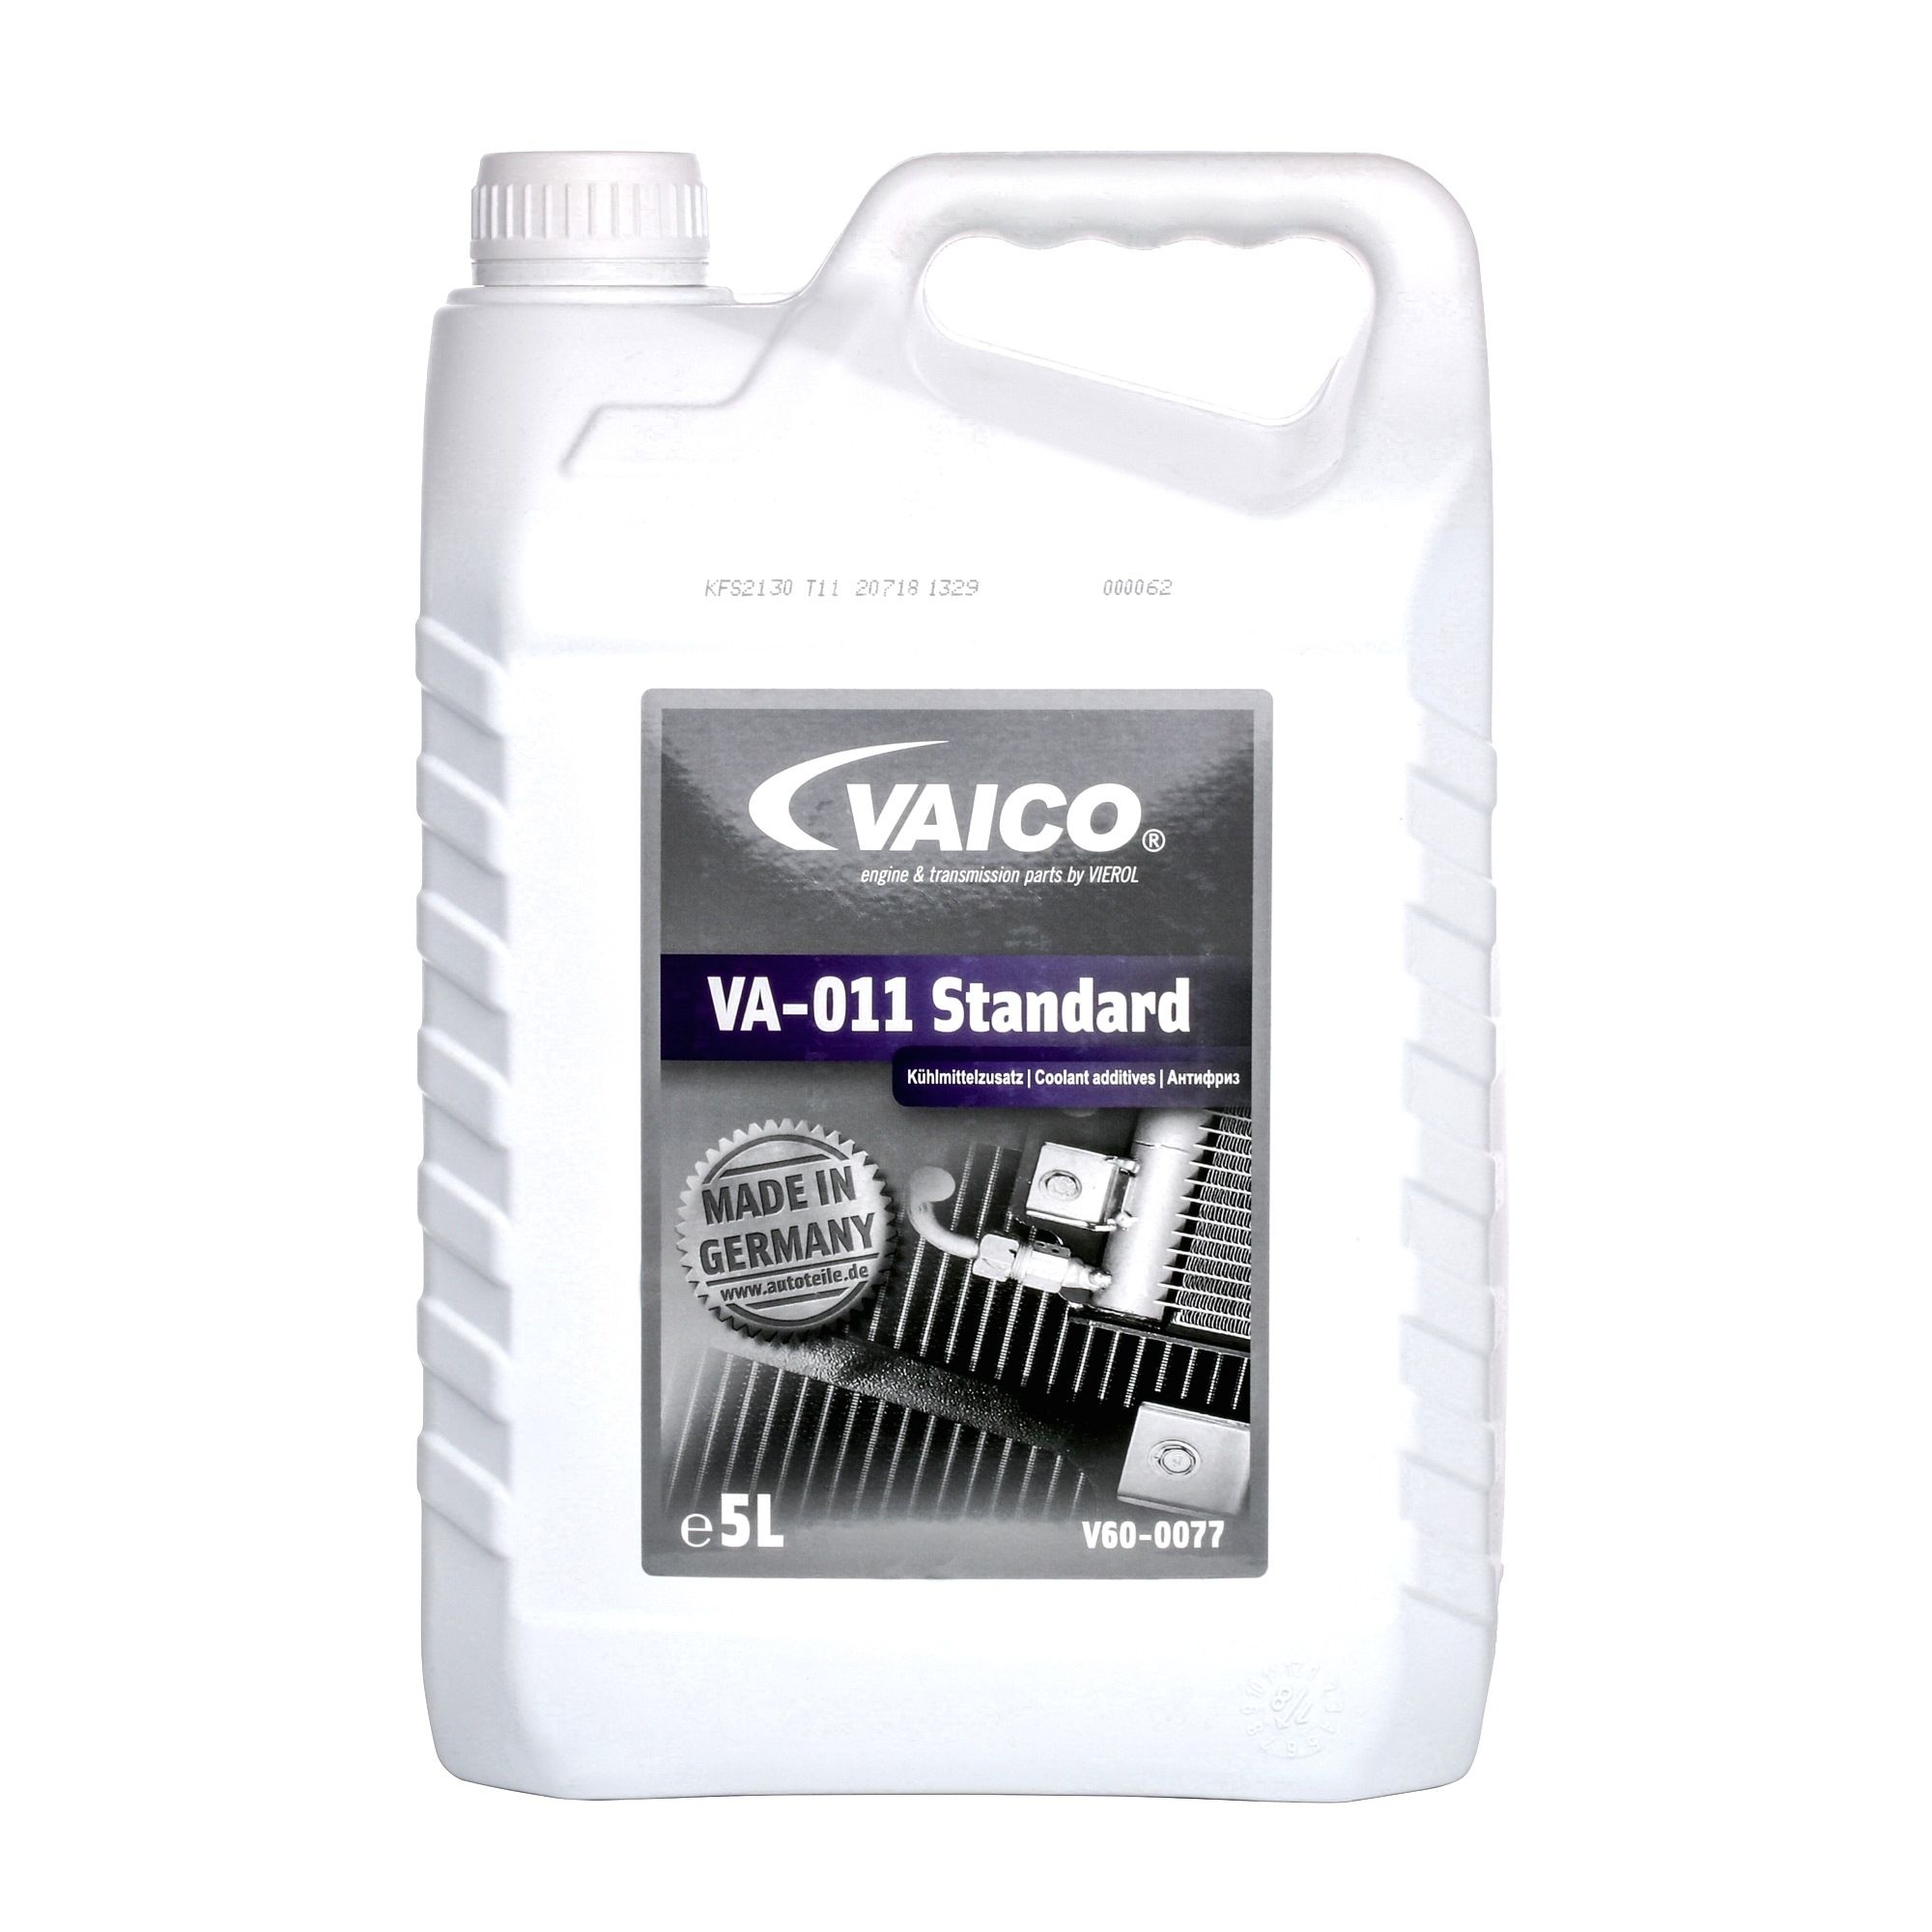 VAICO Frostschutz V60-0077